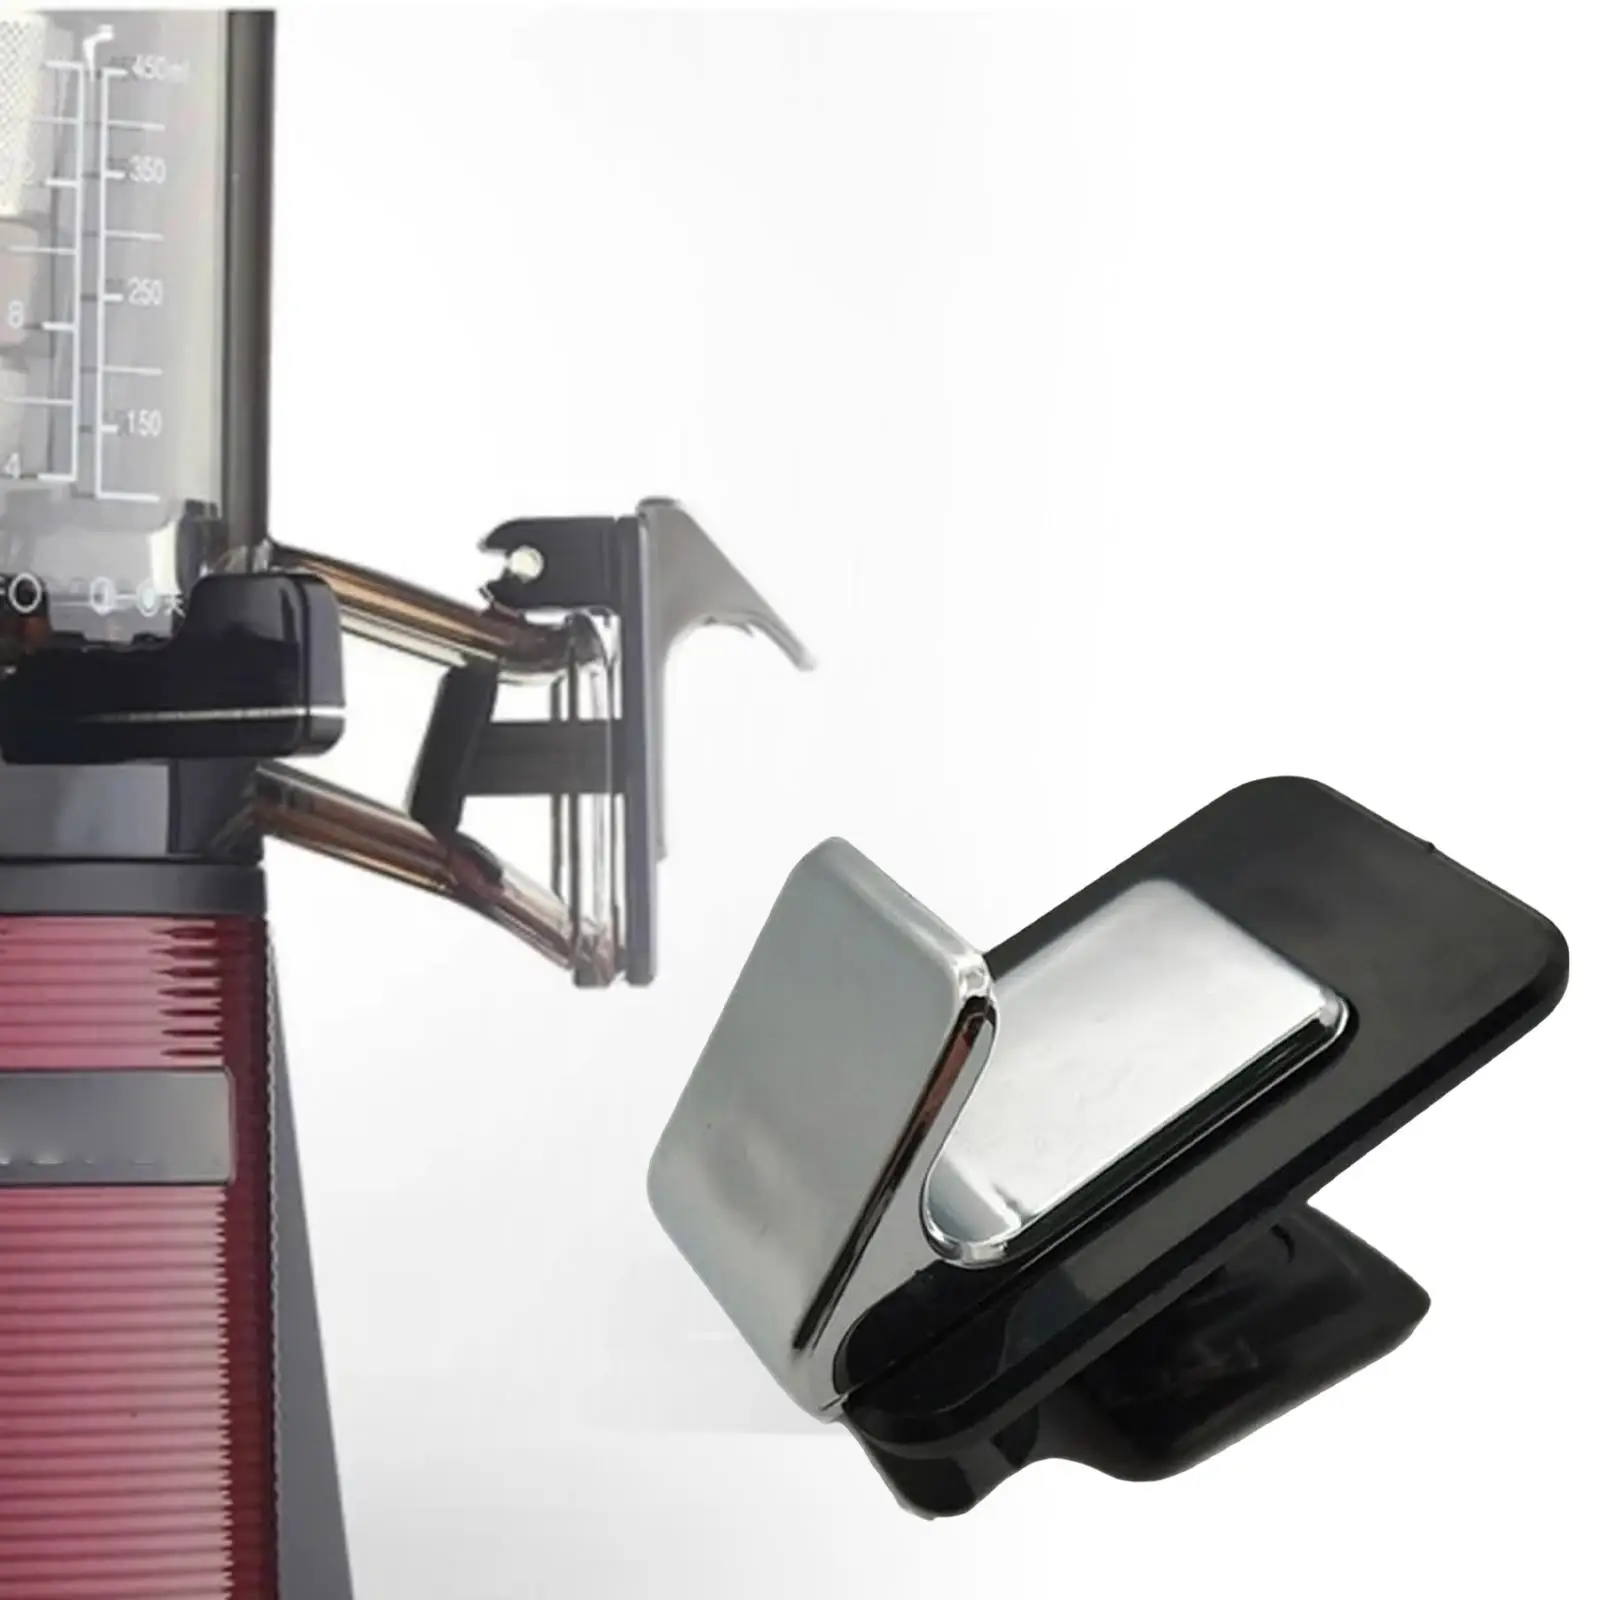 Juicer Juice Outlet Regulating Valve Spare Parts Accessories Plug Replacement for 19Sgm Juicer